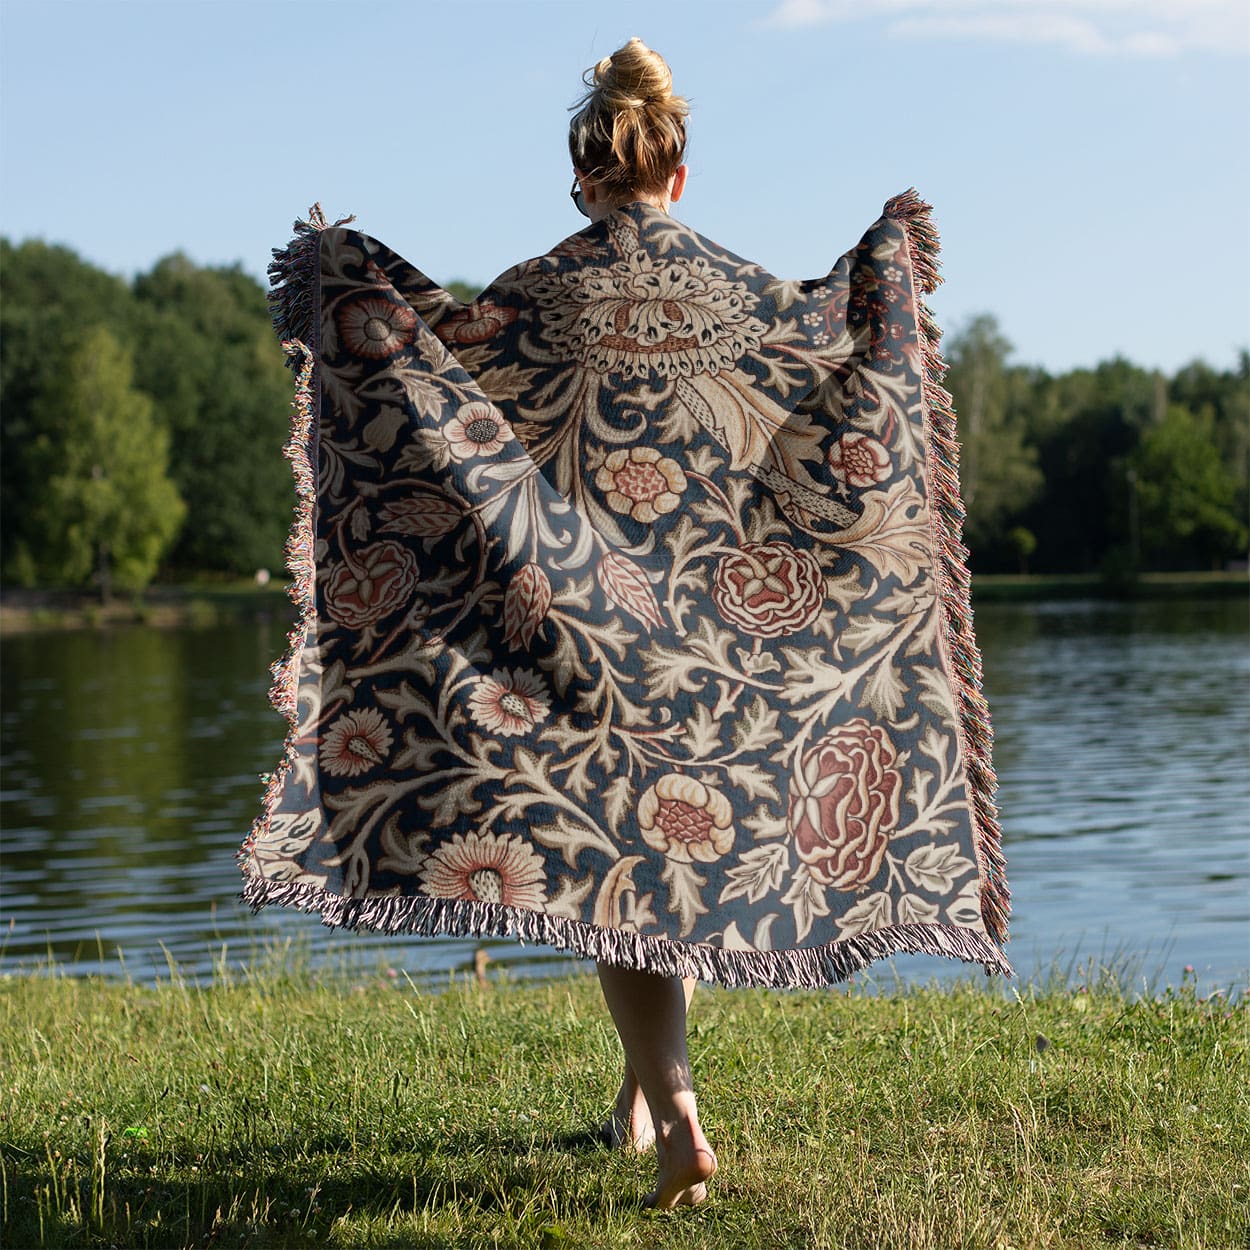 Vintage Wallpaper Woven Blanket Held on a Woman's Back Outside